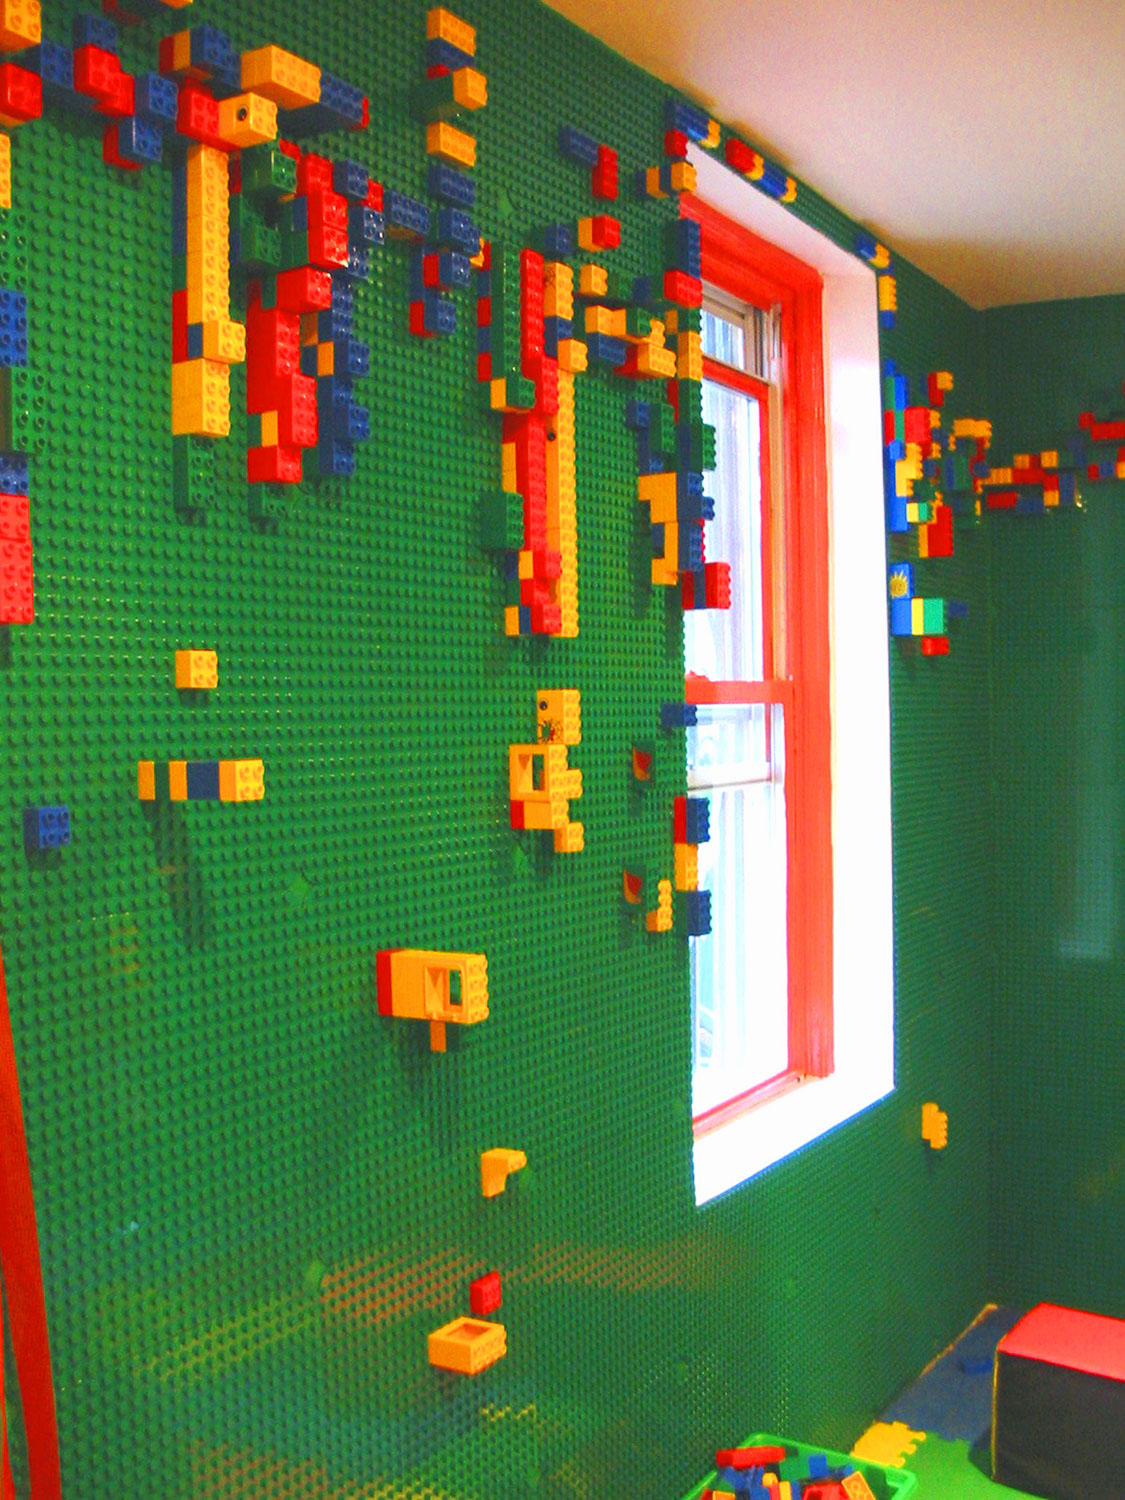 lego & window by Suzan Wines.jpg